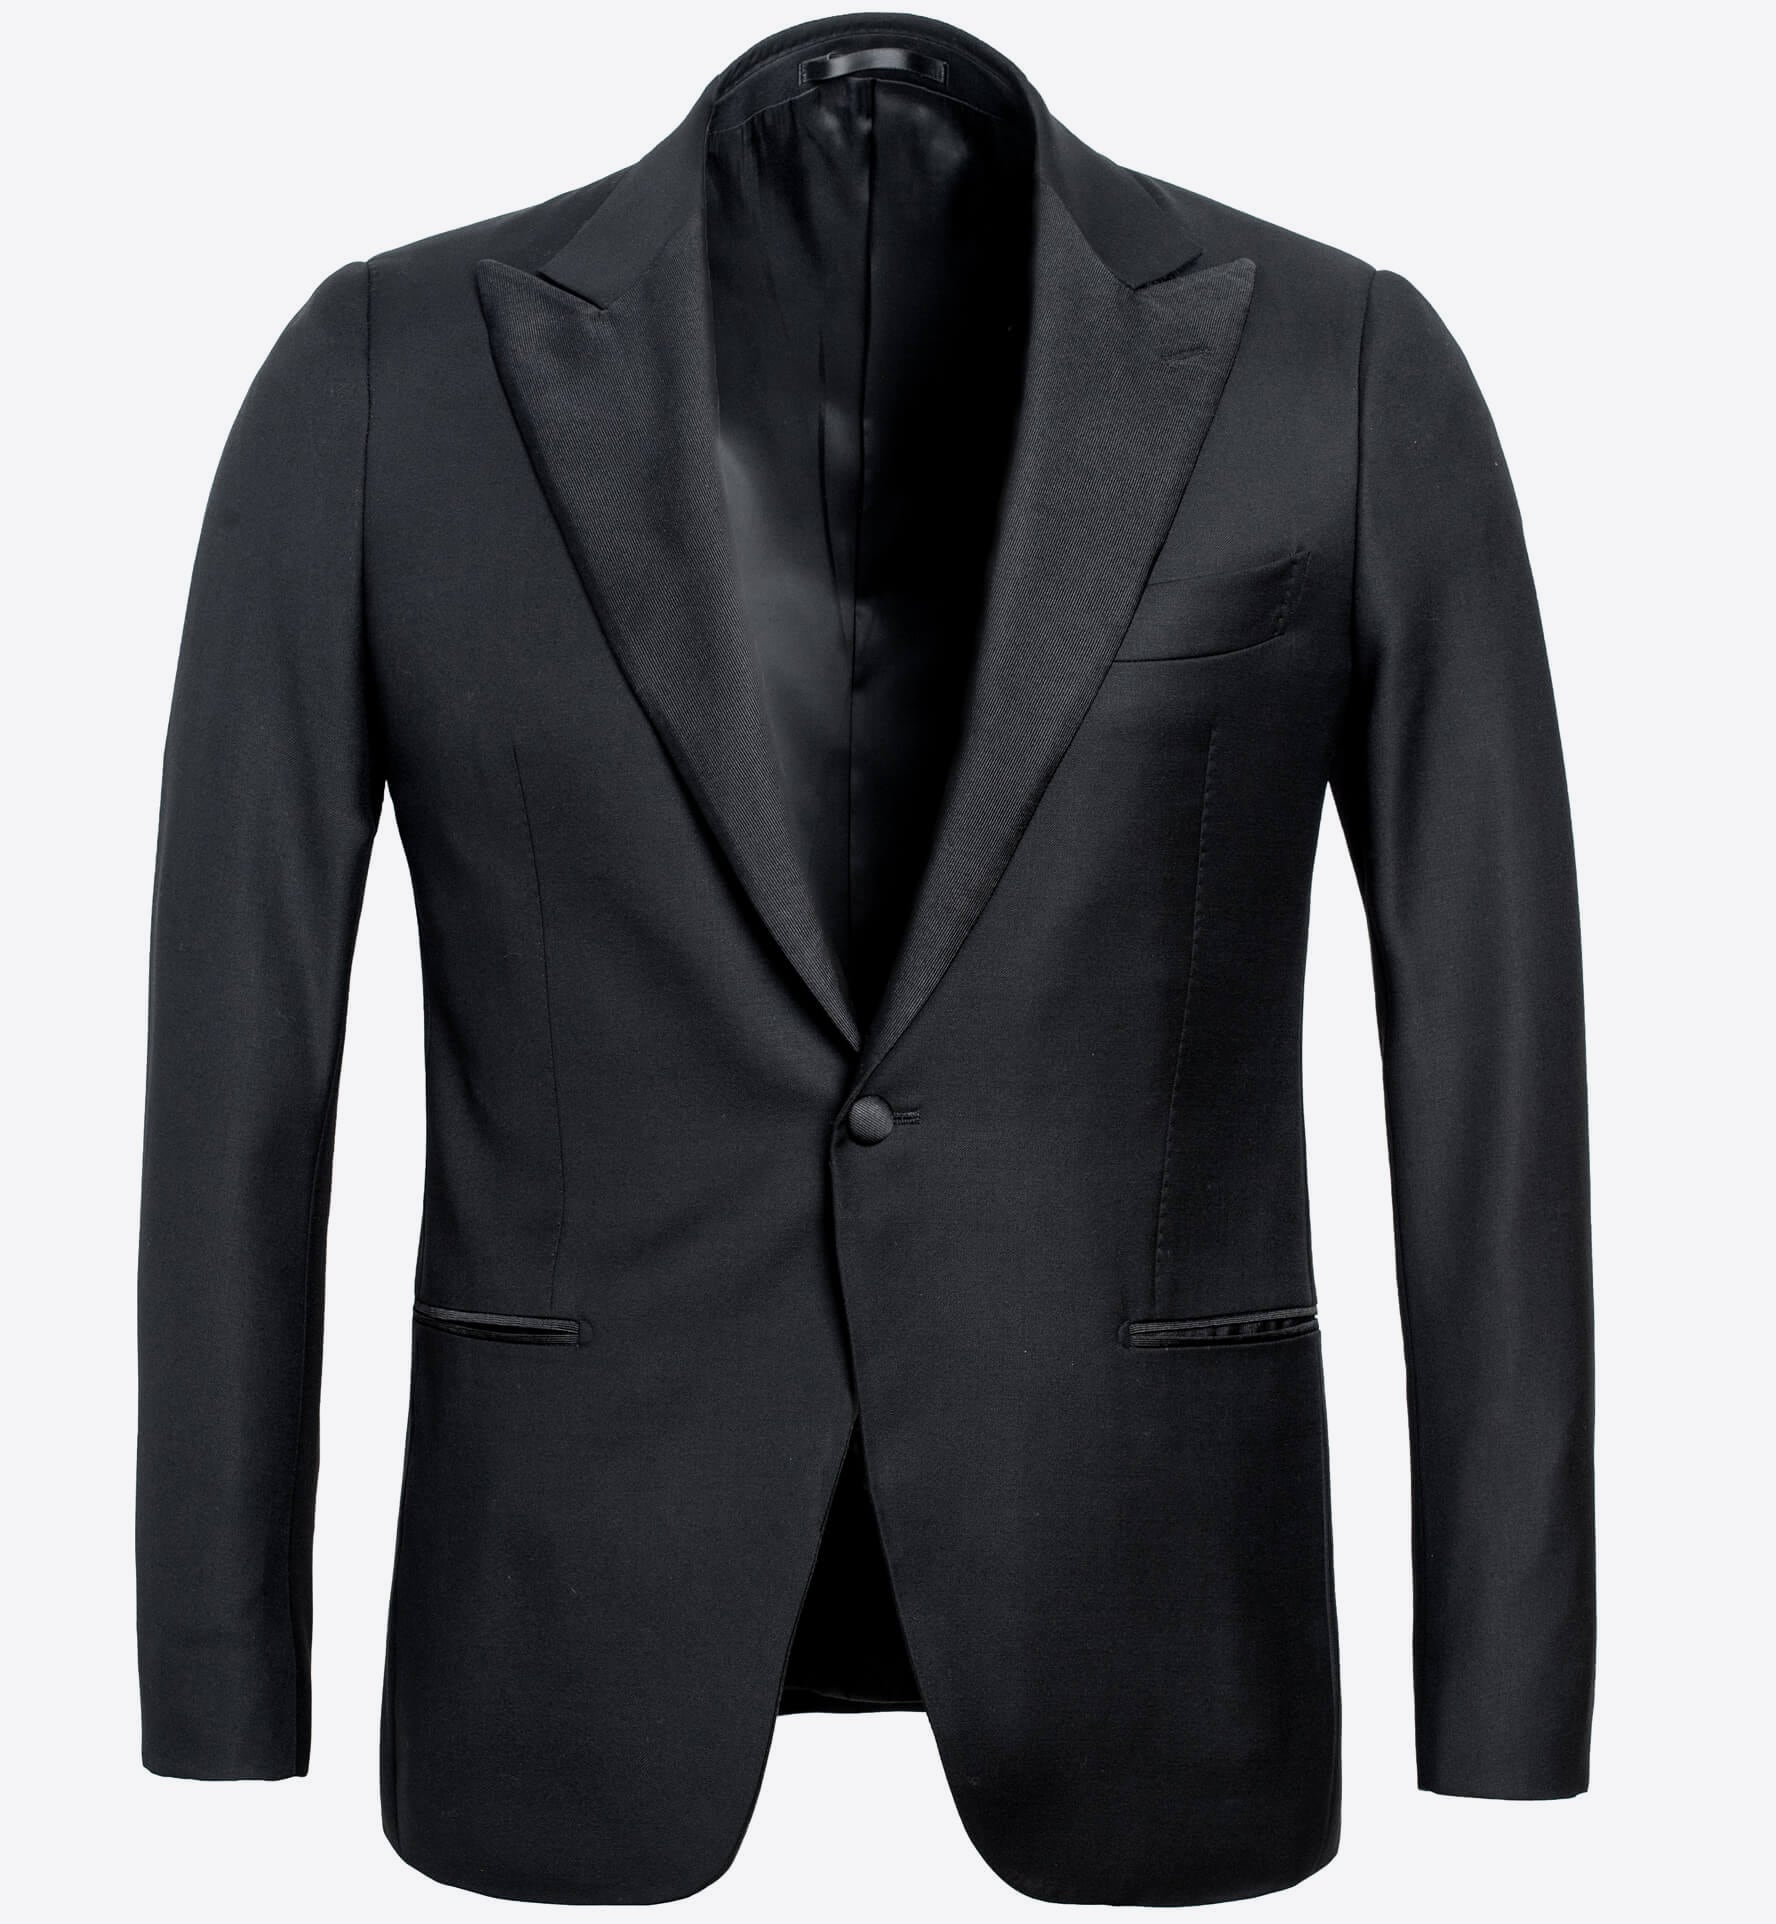 Mayfair Black Wool Tuxedo Jacket - Custom Fit Tailored Clothing